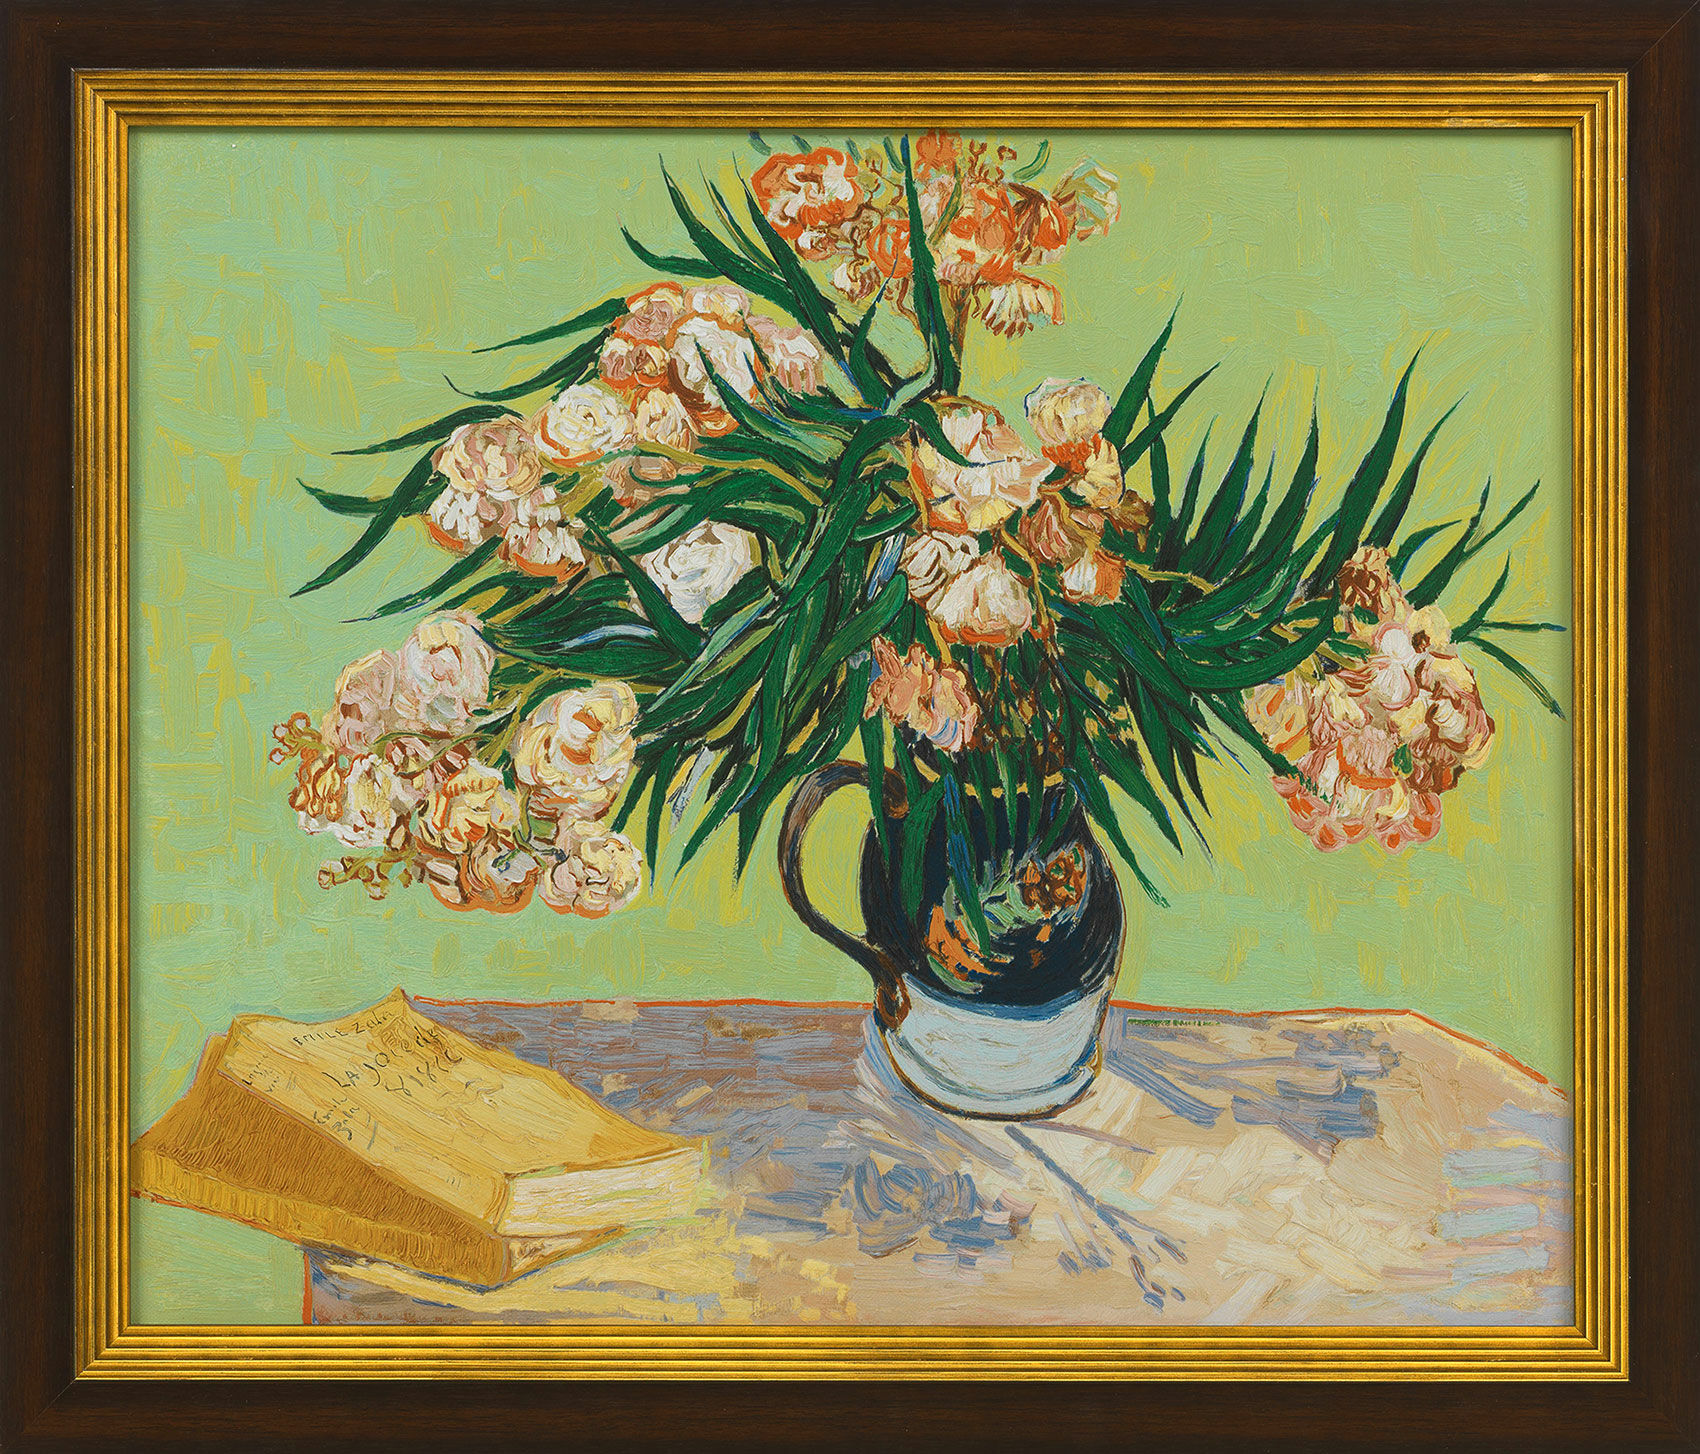 Picture "Vase with Oleanders" (1888), framed by Vincent van Gogh